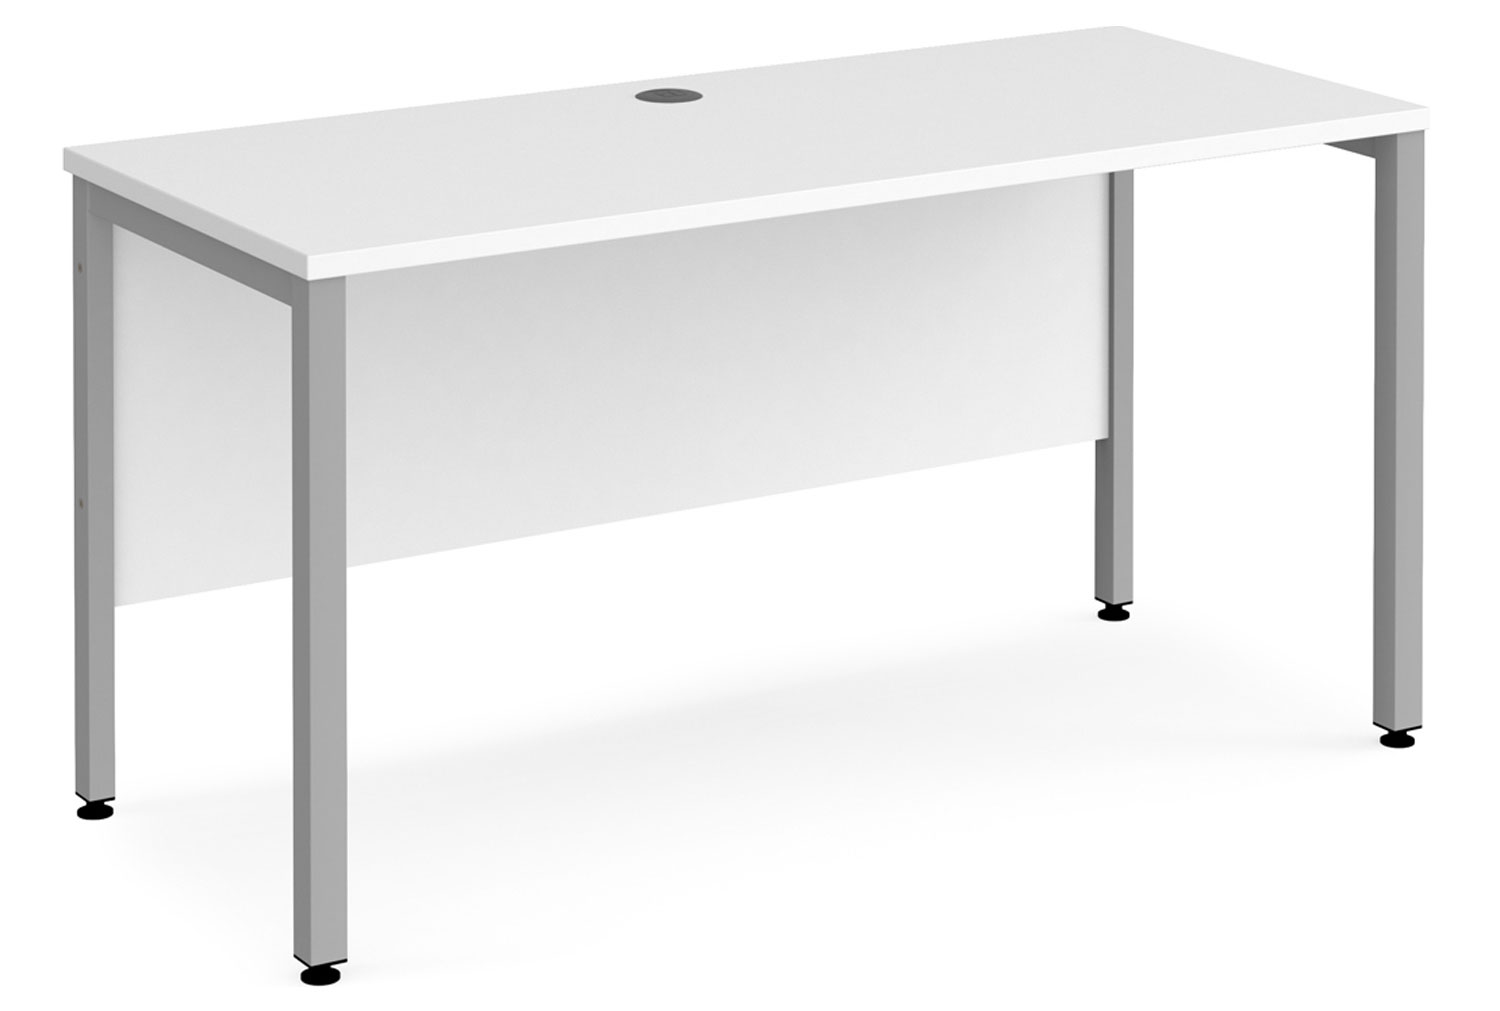 Value Line Deluxe Bench Narrow Rectangular Office Desks (Silver Legs), 140wx60dx73h (cm), White